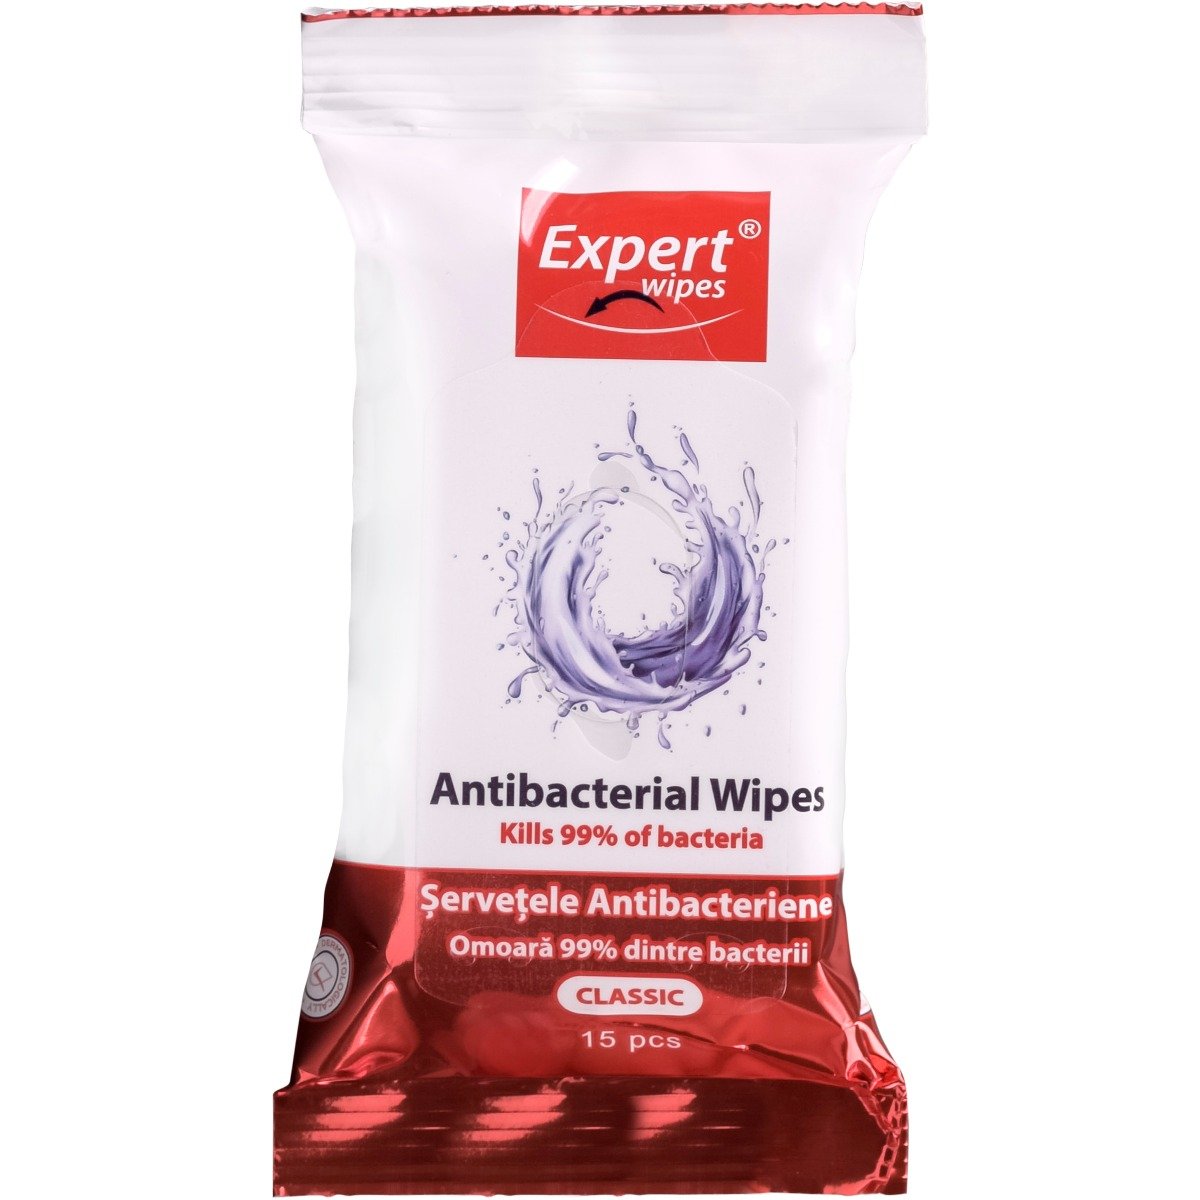 Servetele antibacteriene Expert Wipes Clasic, 15 buc antibacteriene